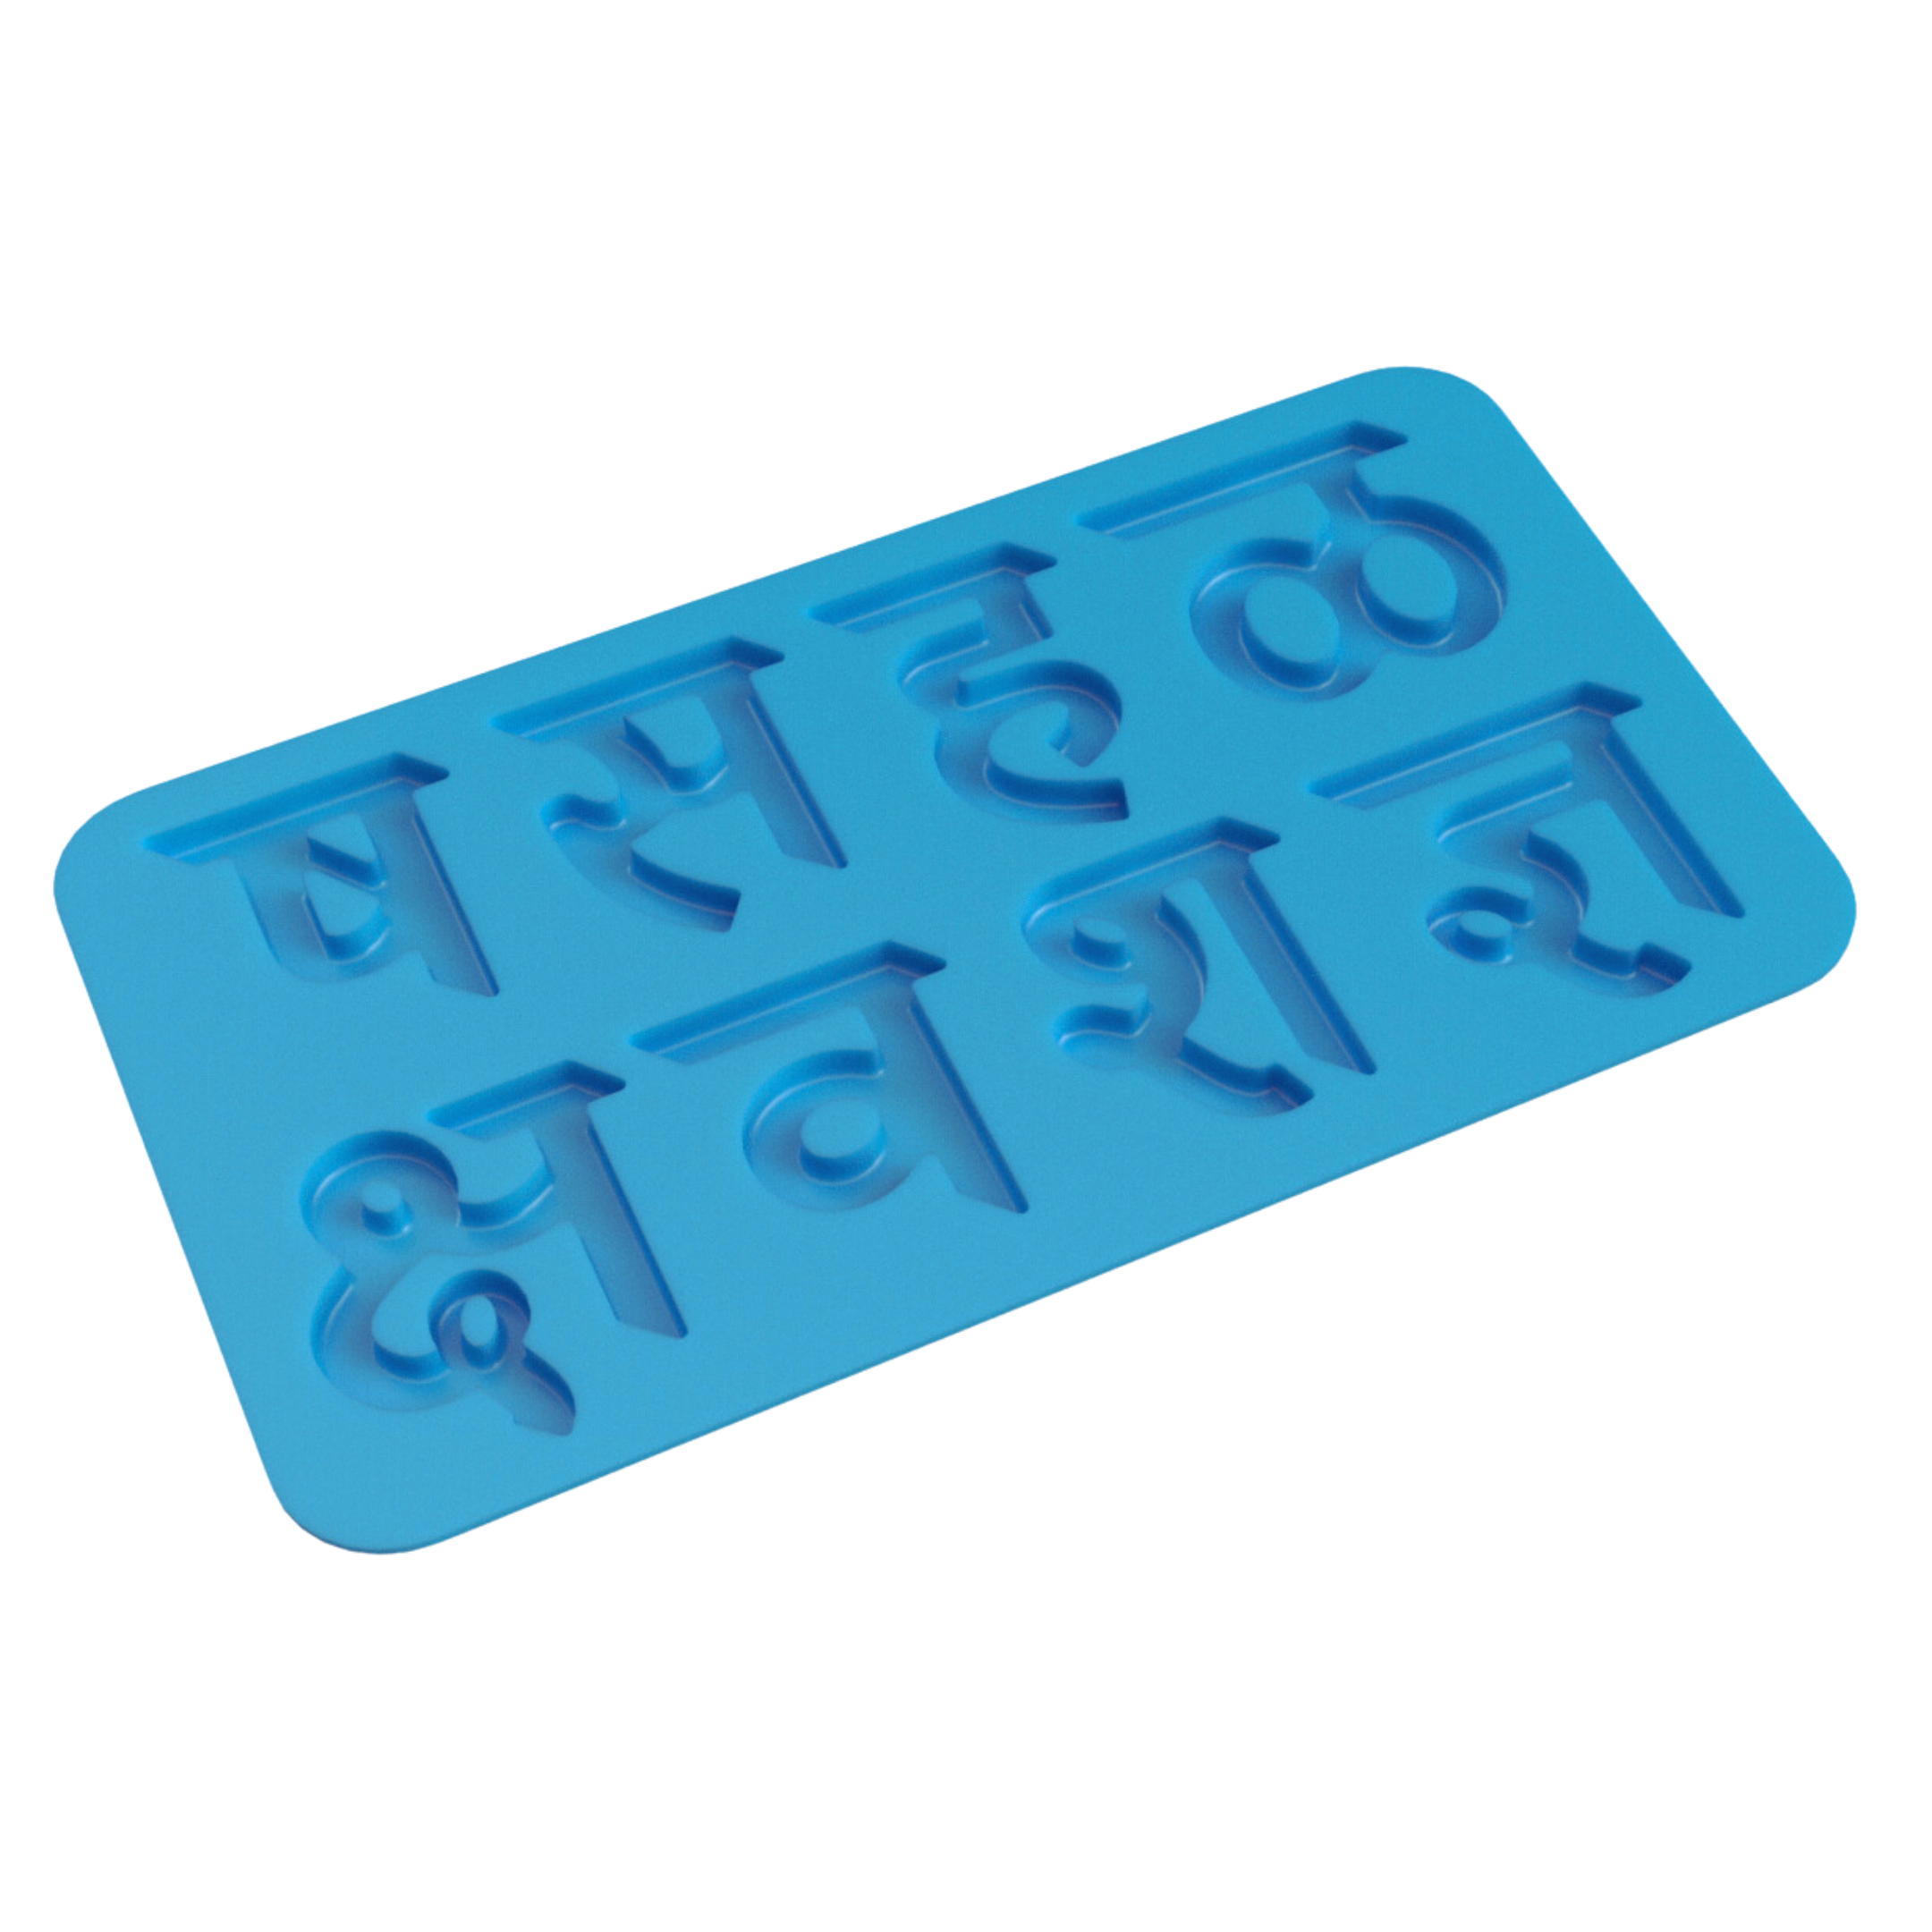 Hindi Alphabets Mould 5 - Huh - The Mould Story